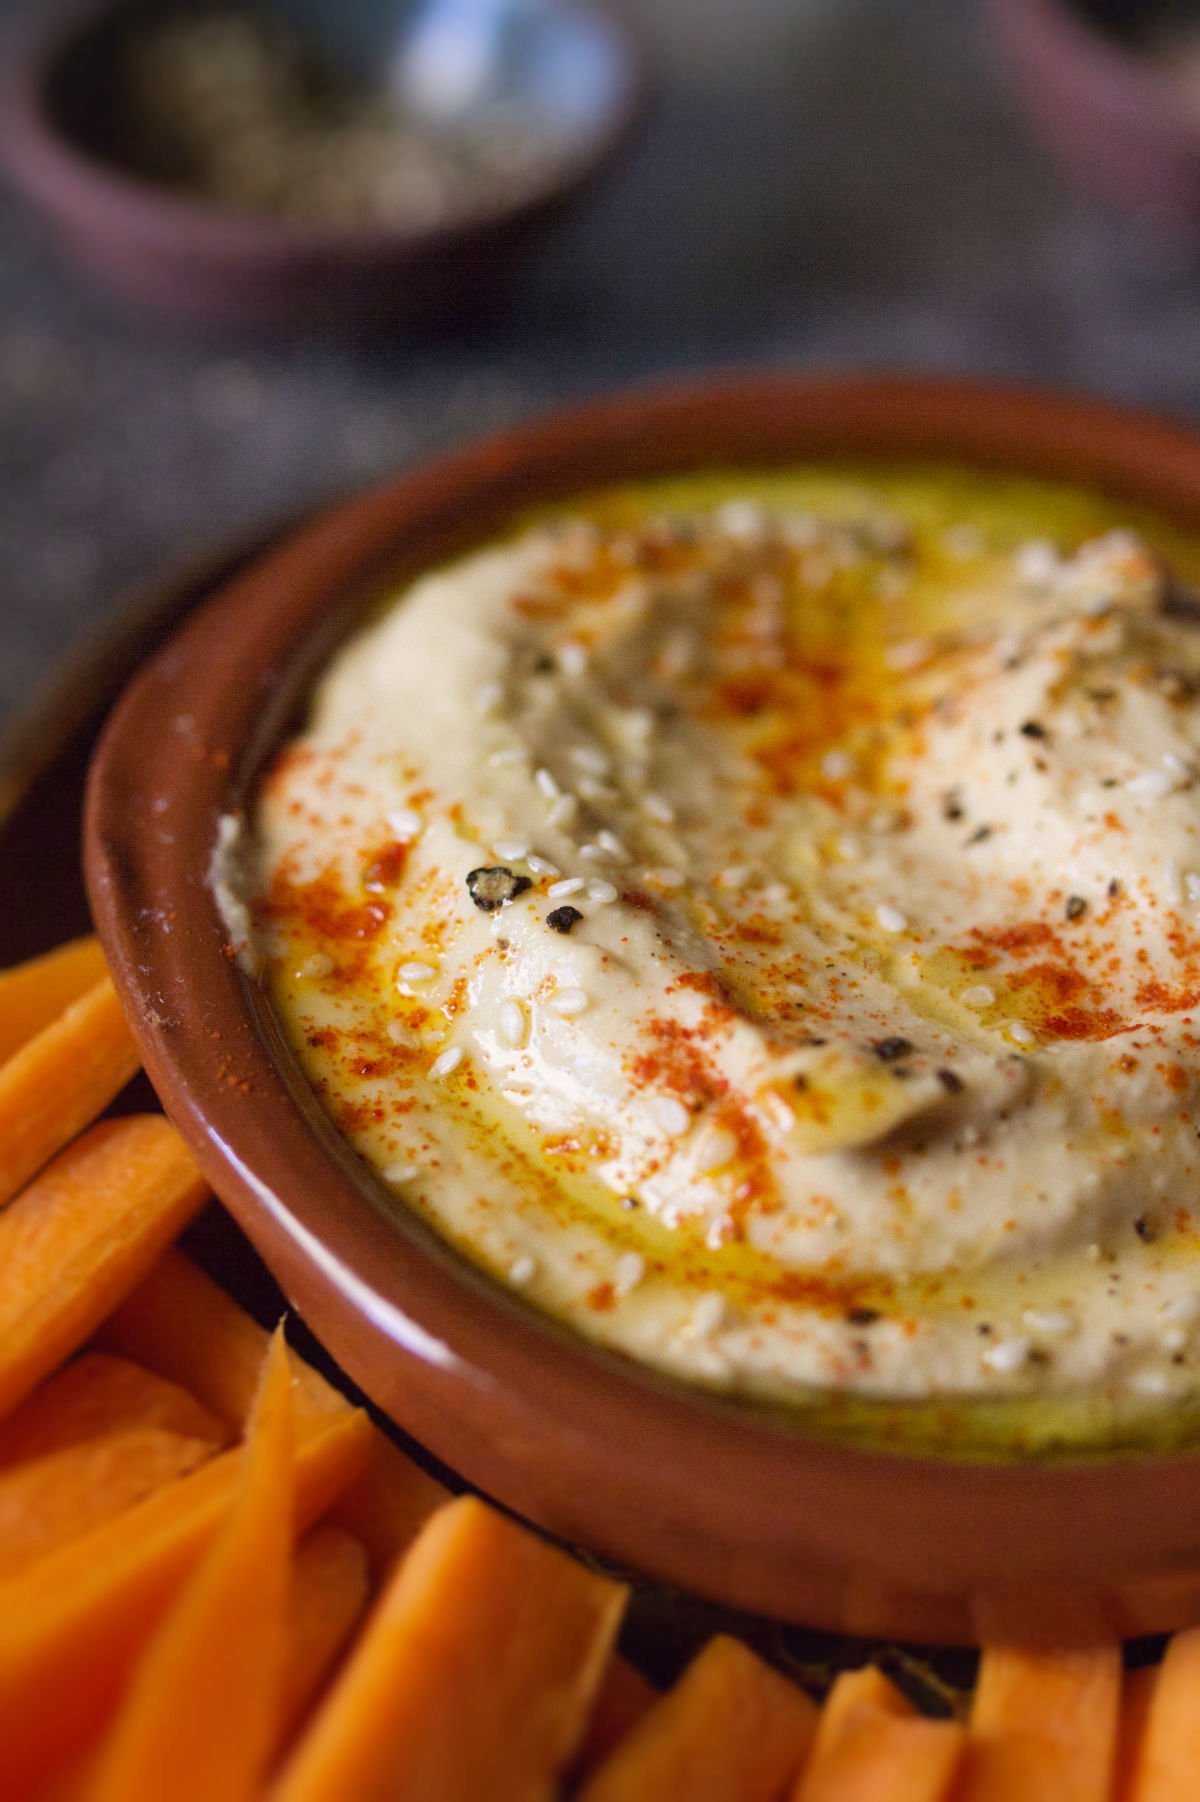 A bowl of Mediterranean hummus beside some carrot sticks